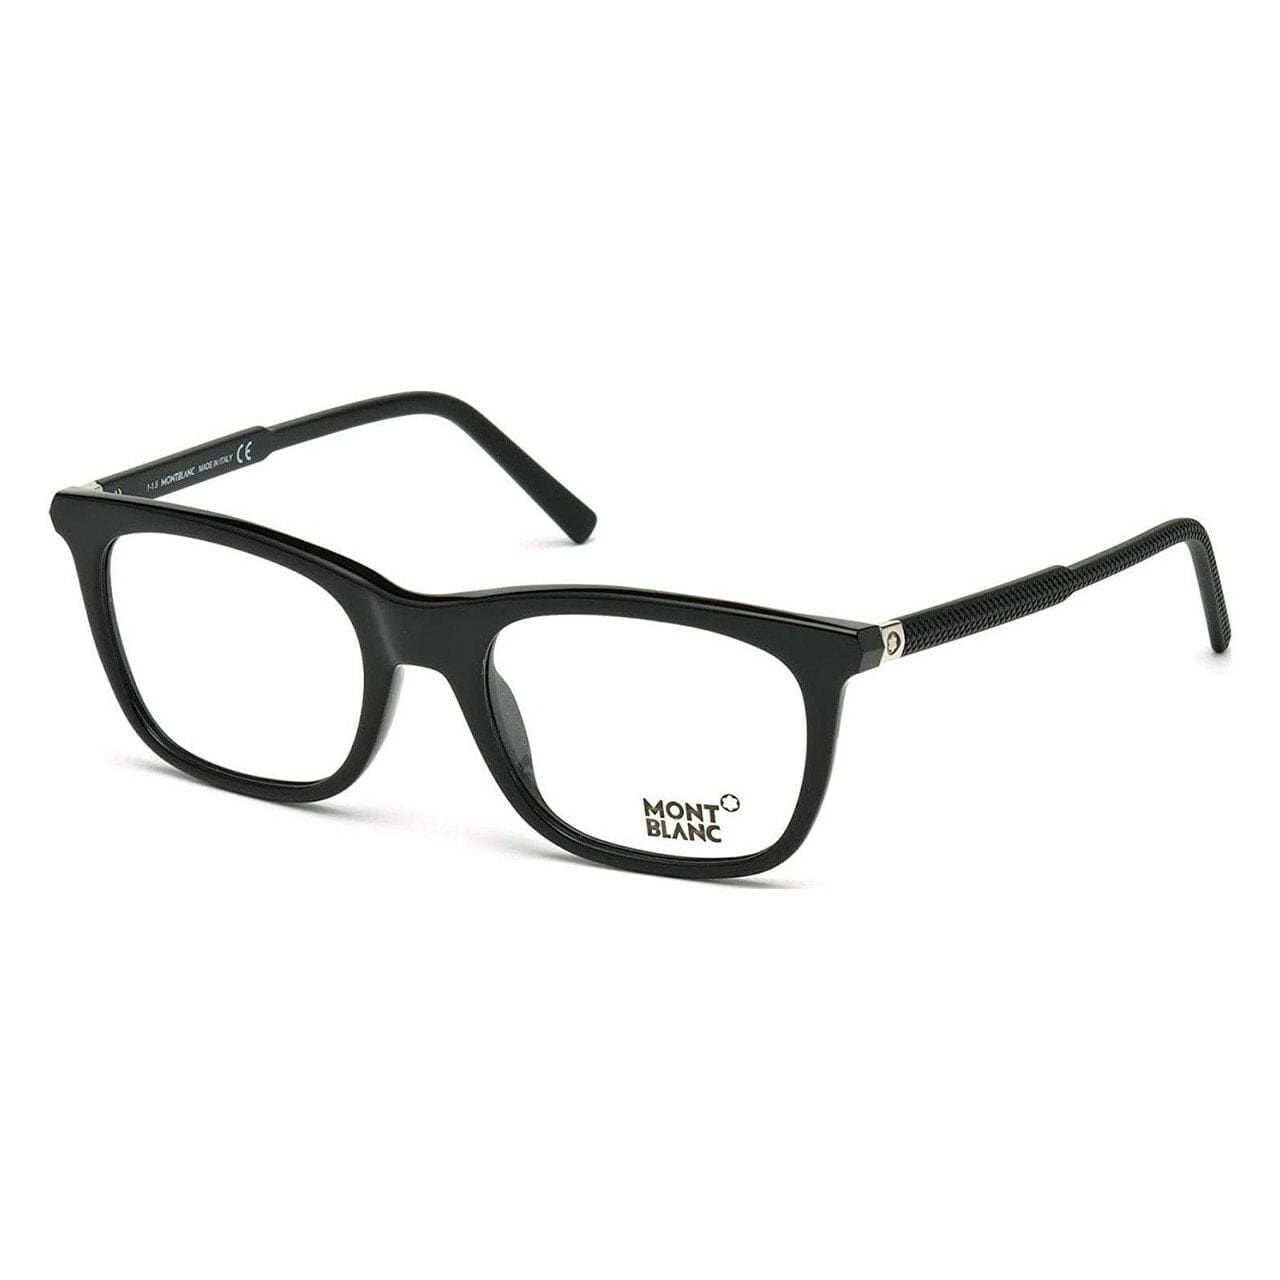 Montblanc MB0610-005 Black Men's Square Eyeglasses Frames 664689739219